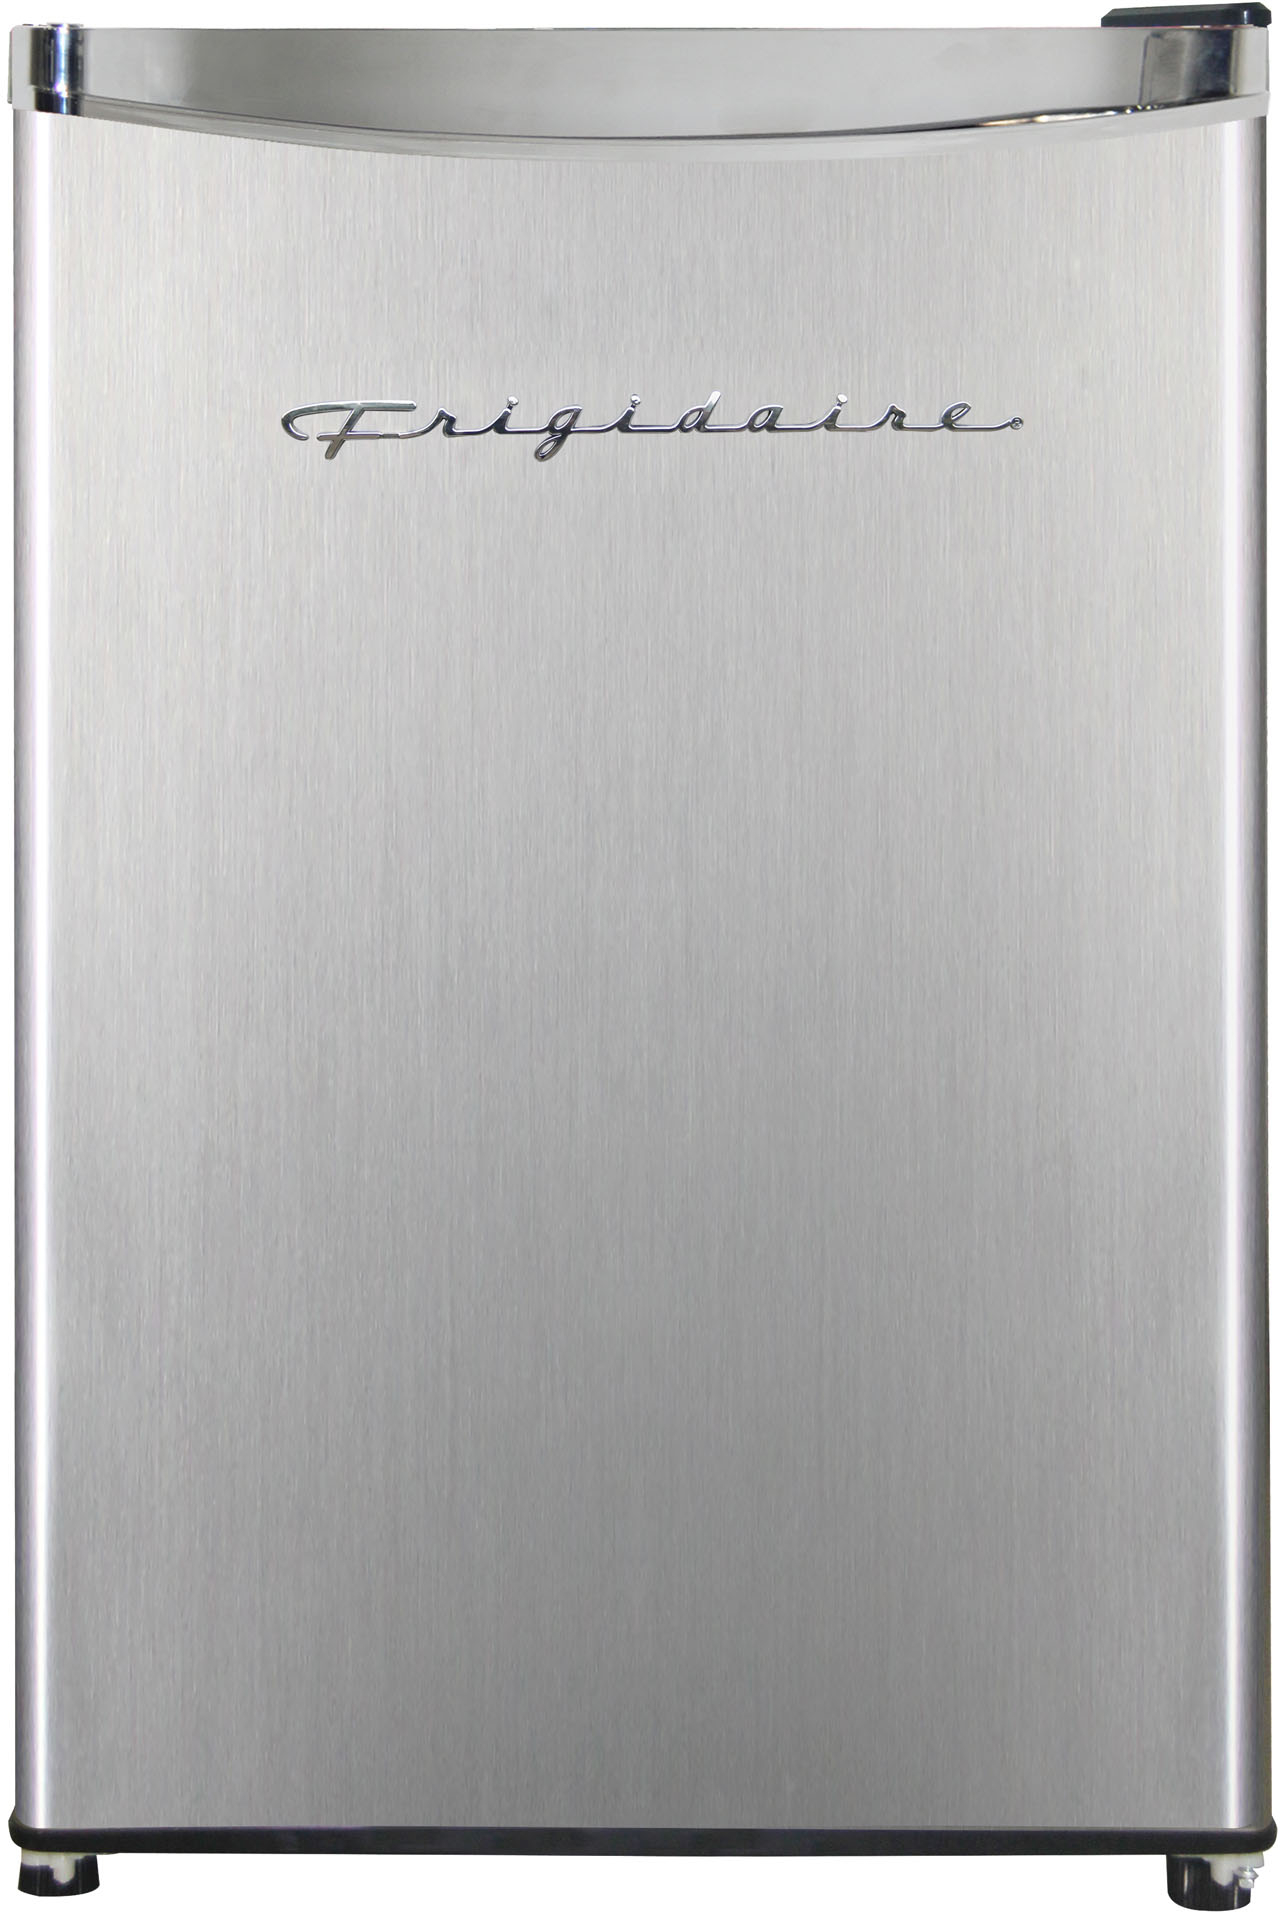 Frigidaire Platinum Series Retro 3.2 Cu. Ft. Compact Fridge Stainless with  Chrome Trim Stainless/Chrome Trim EFR323 - Best Buy